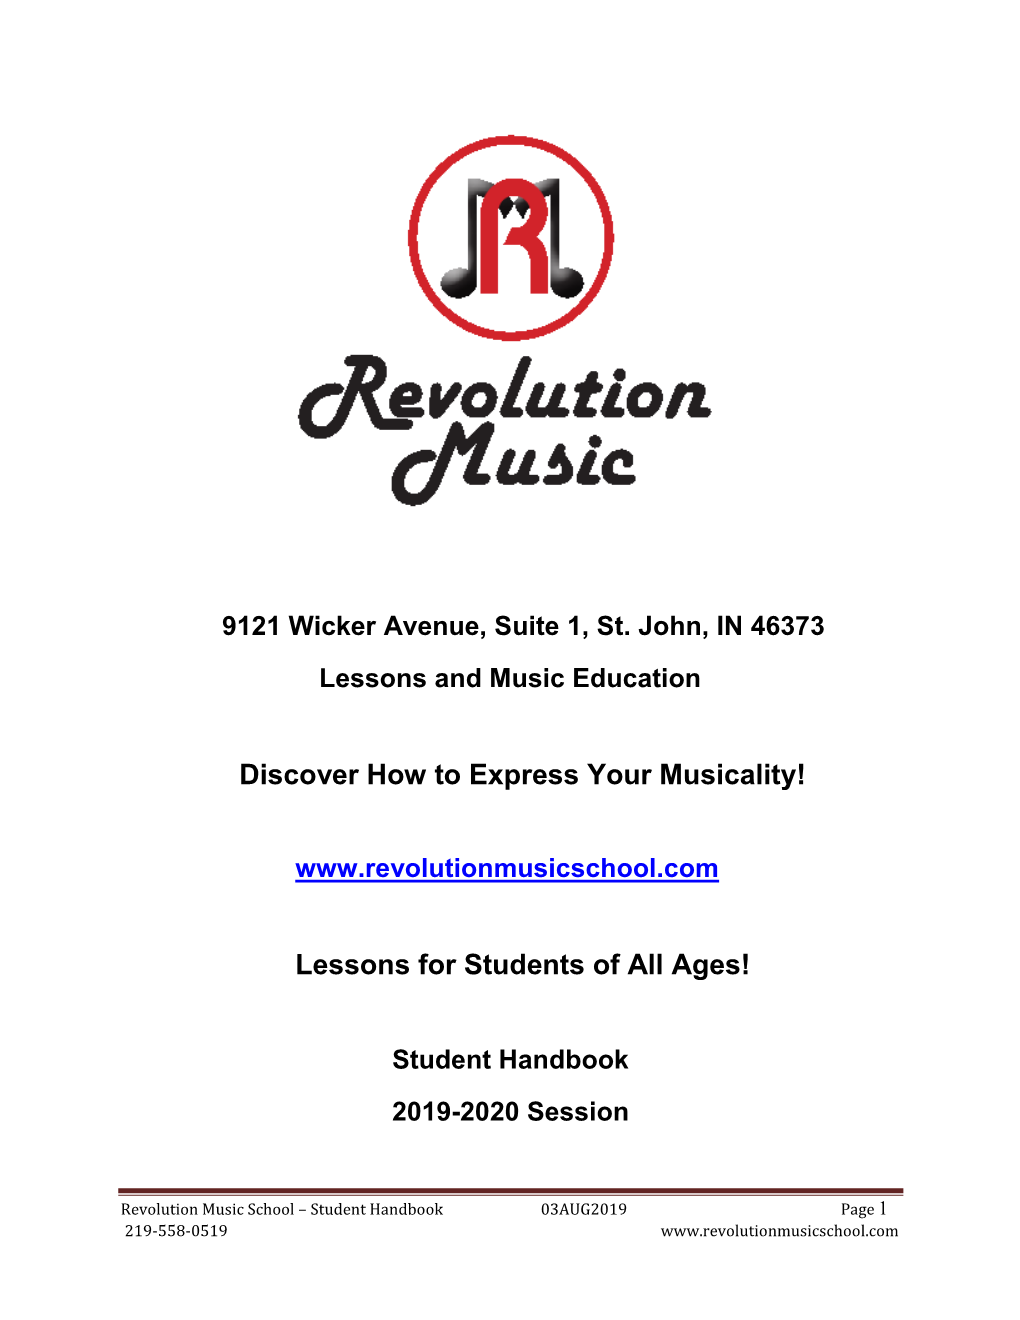 Revolution Music Student Handbook